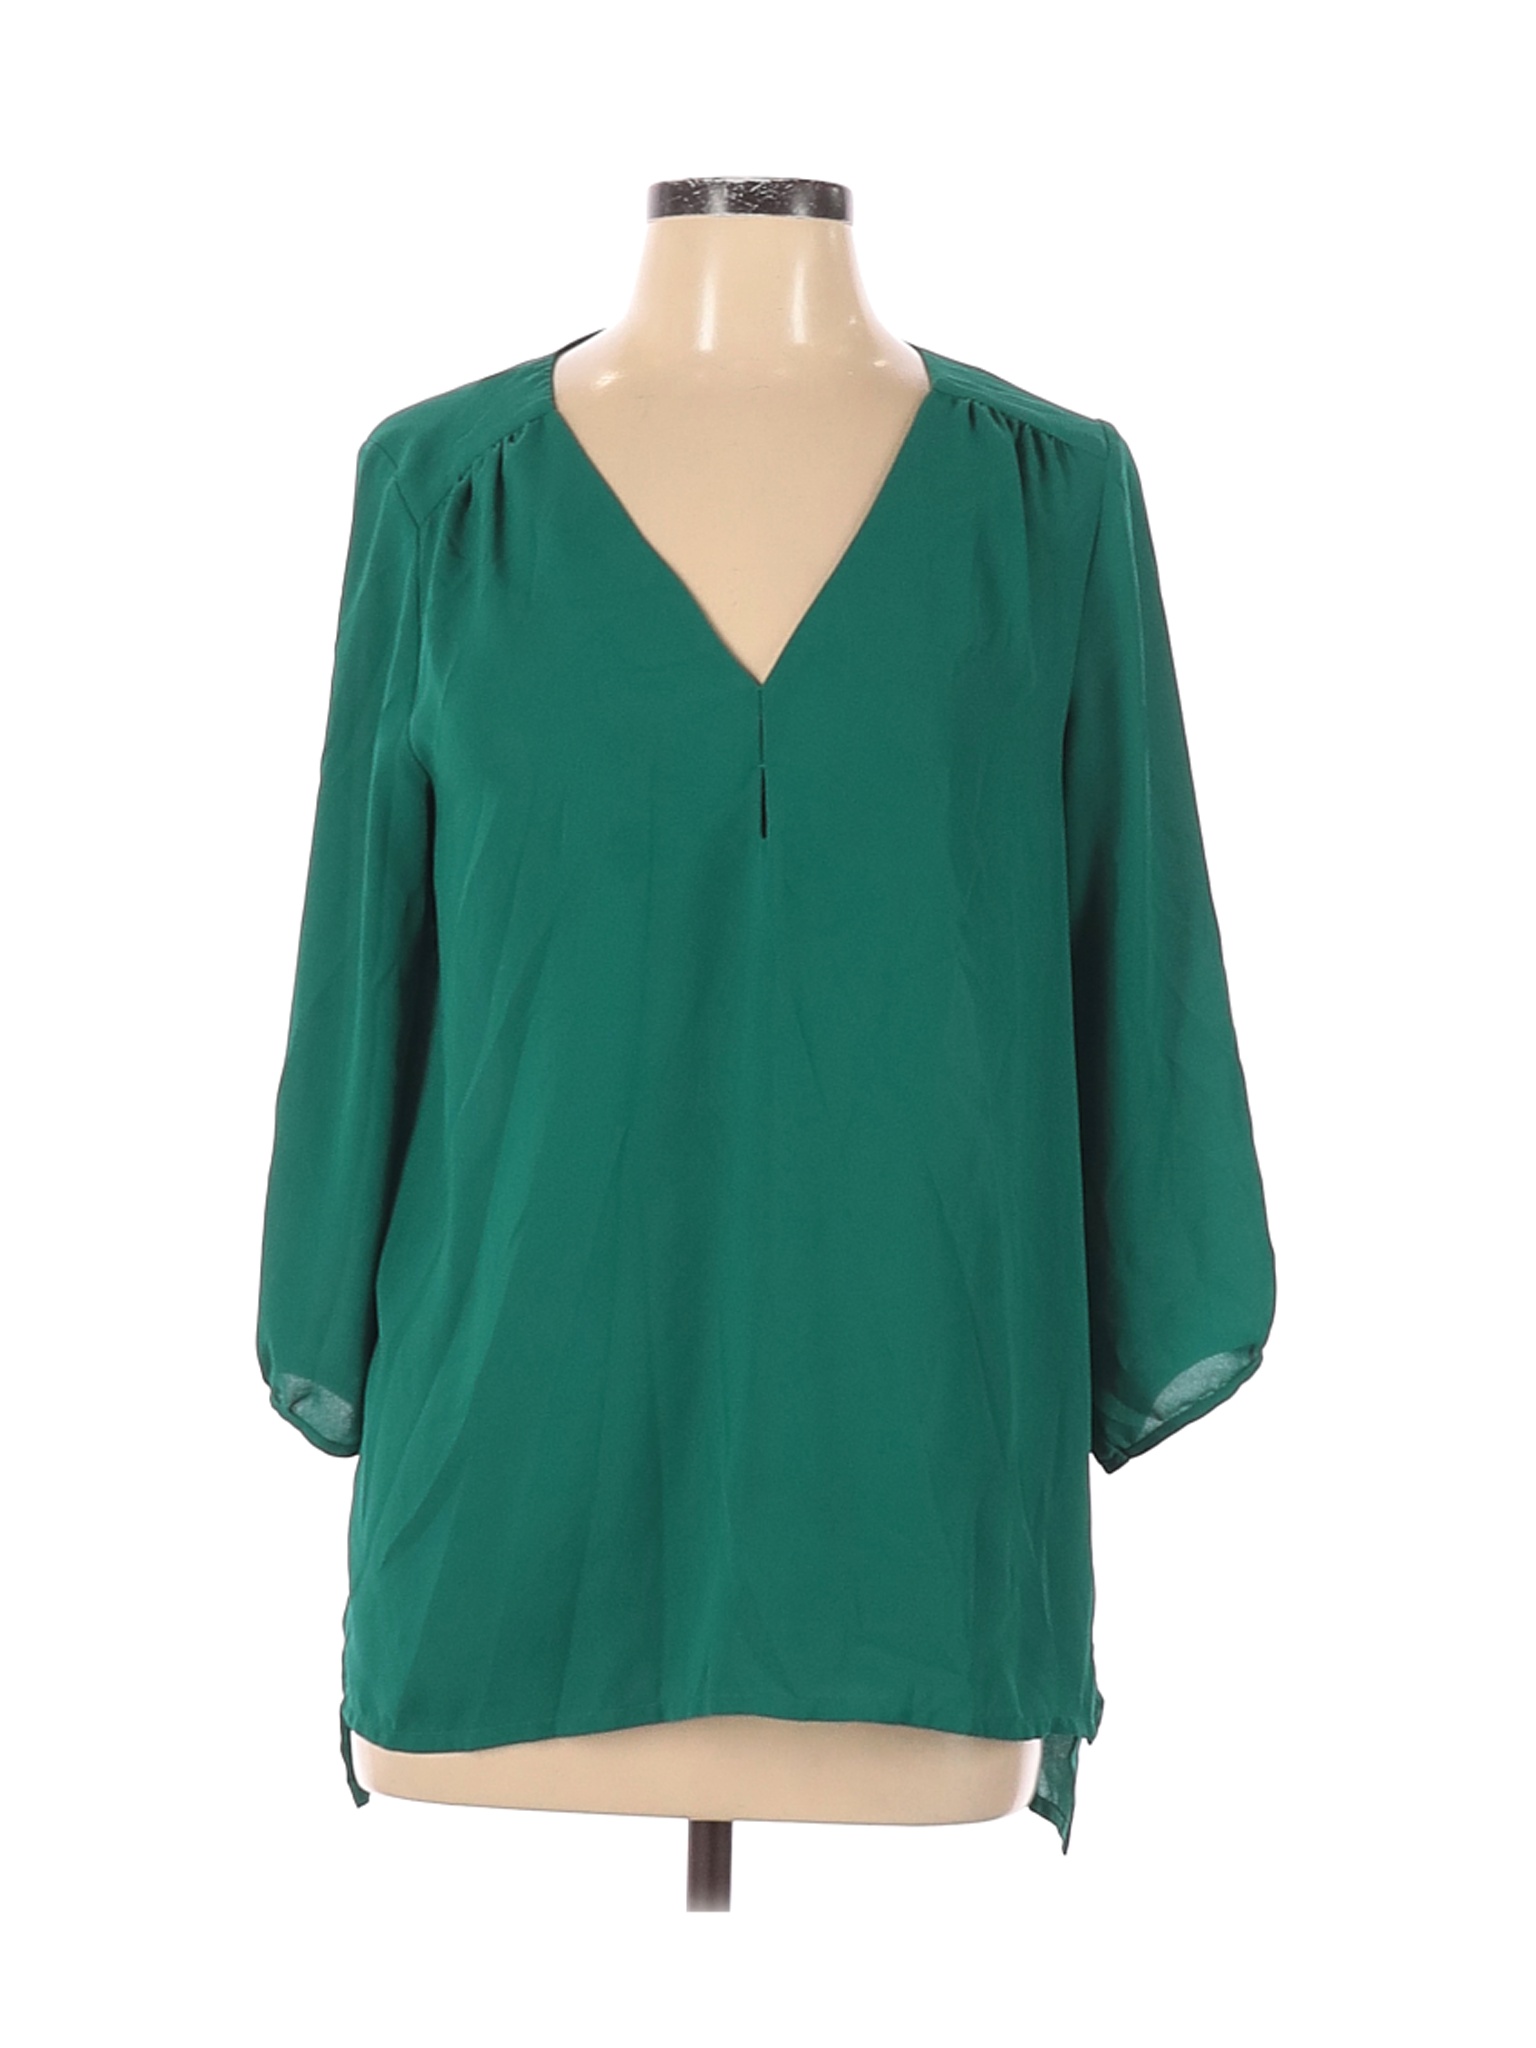 H&M Women Green 3/4 Sleeve Blouse 10 | eBay